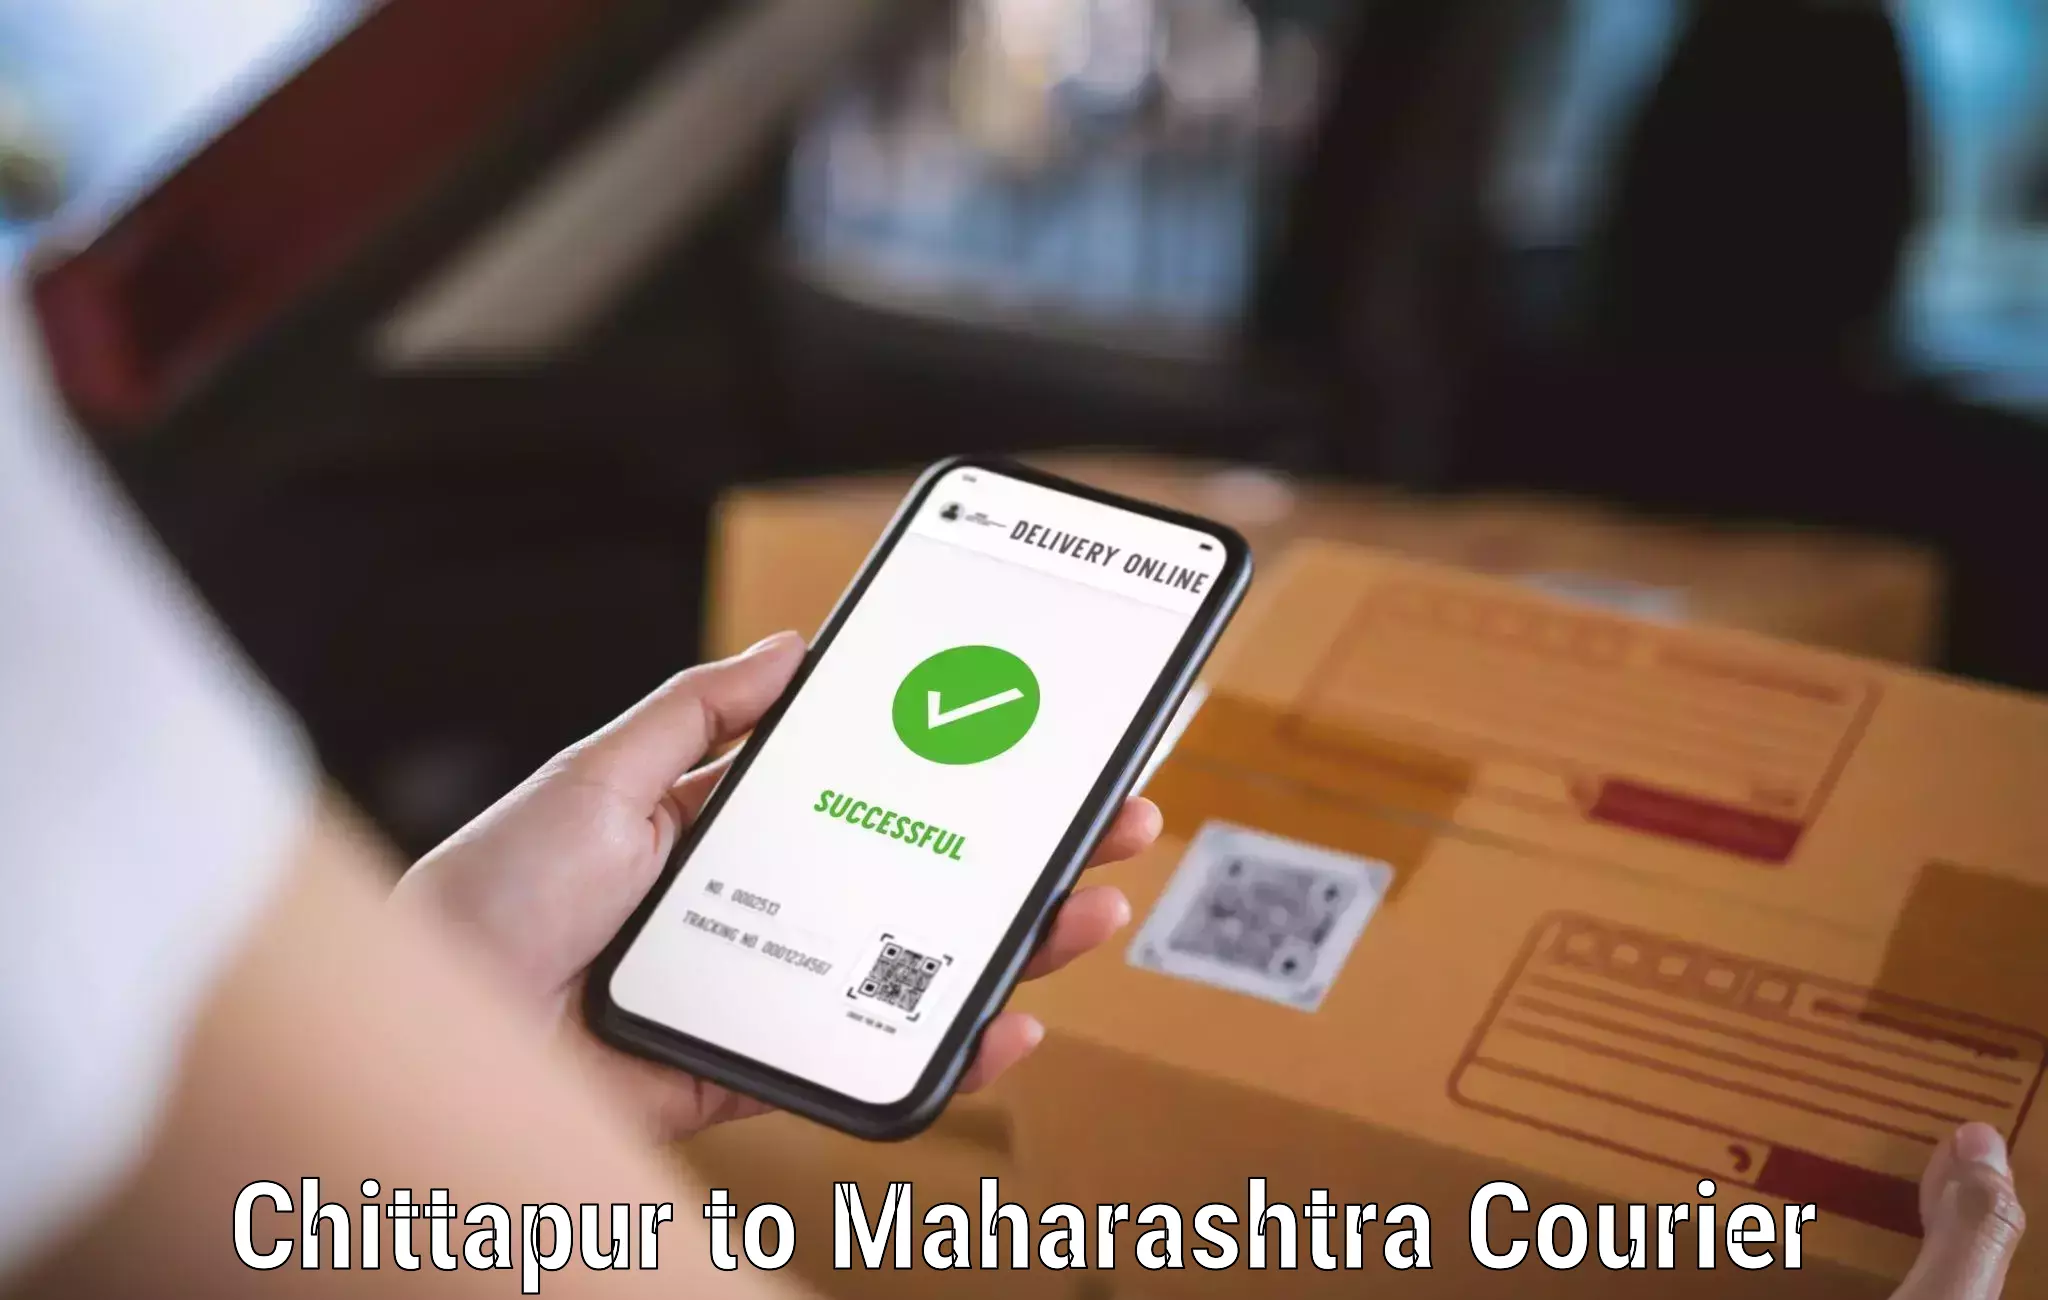 High-priority parcel service Chittapur to Solapur